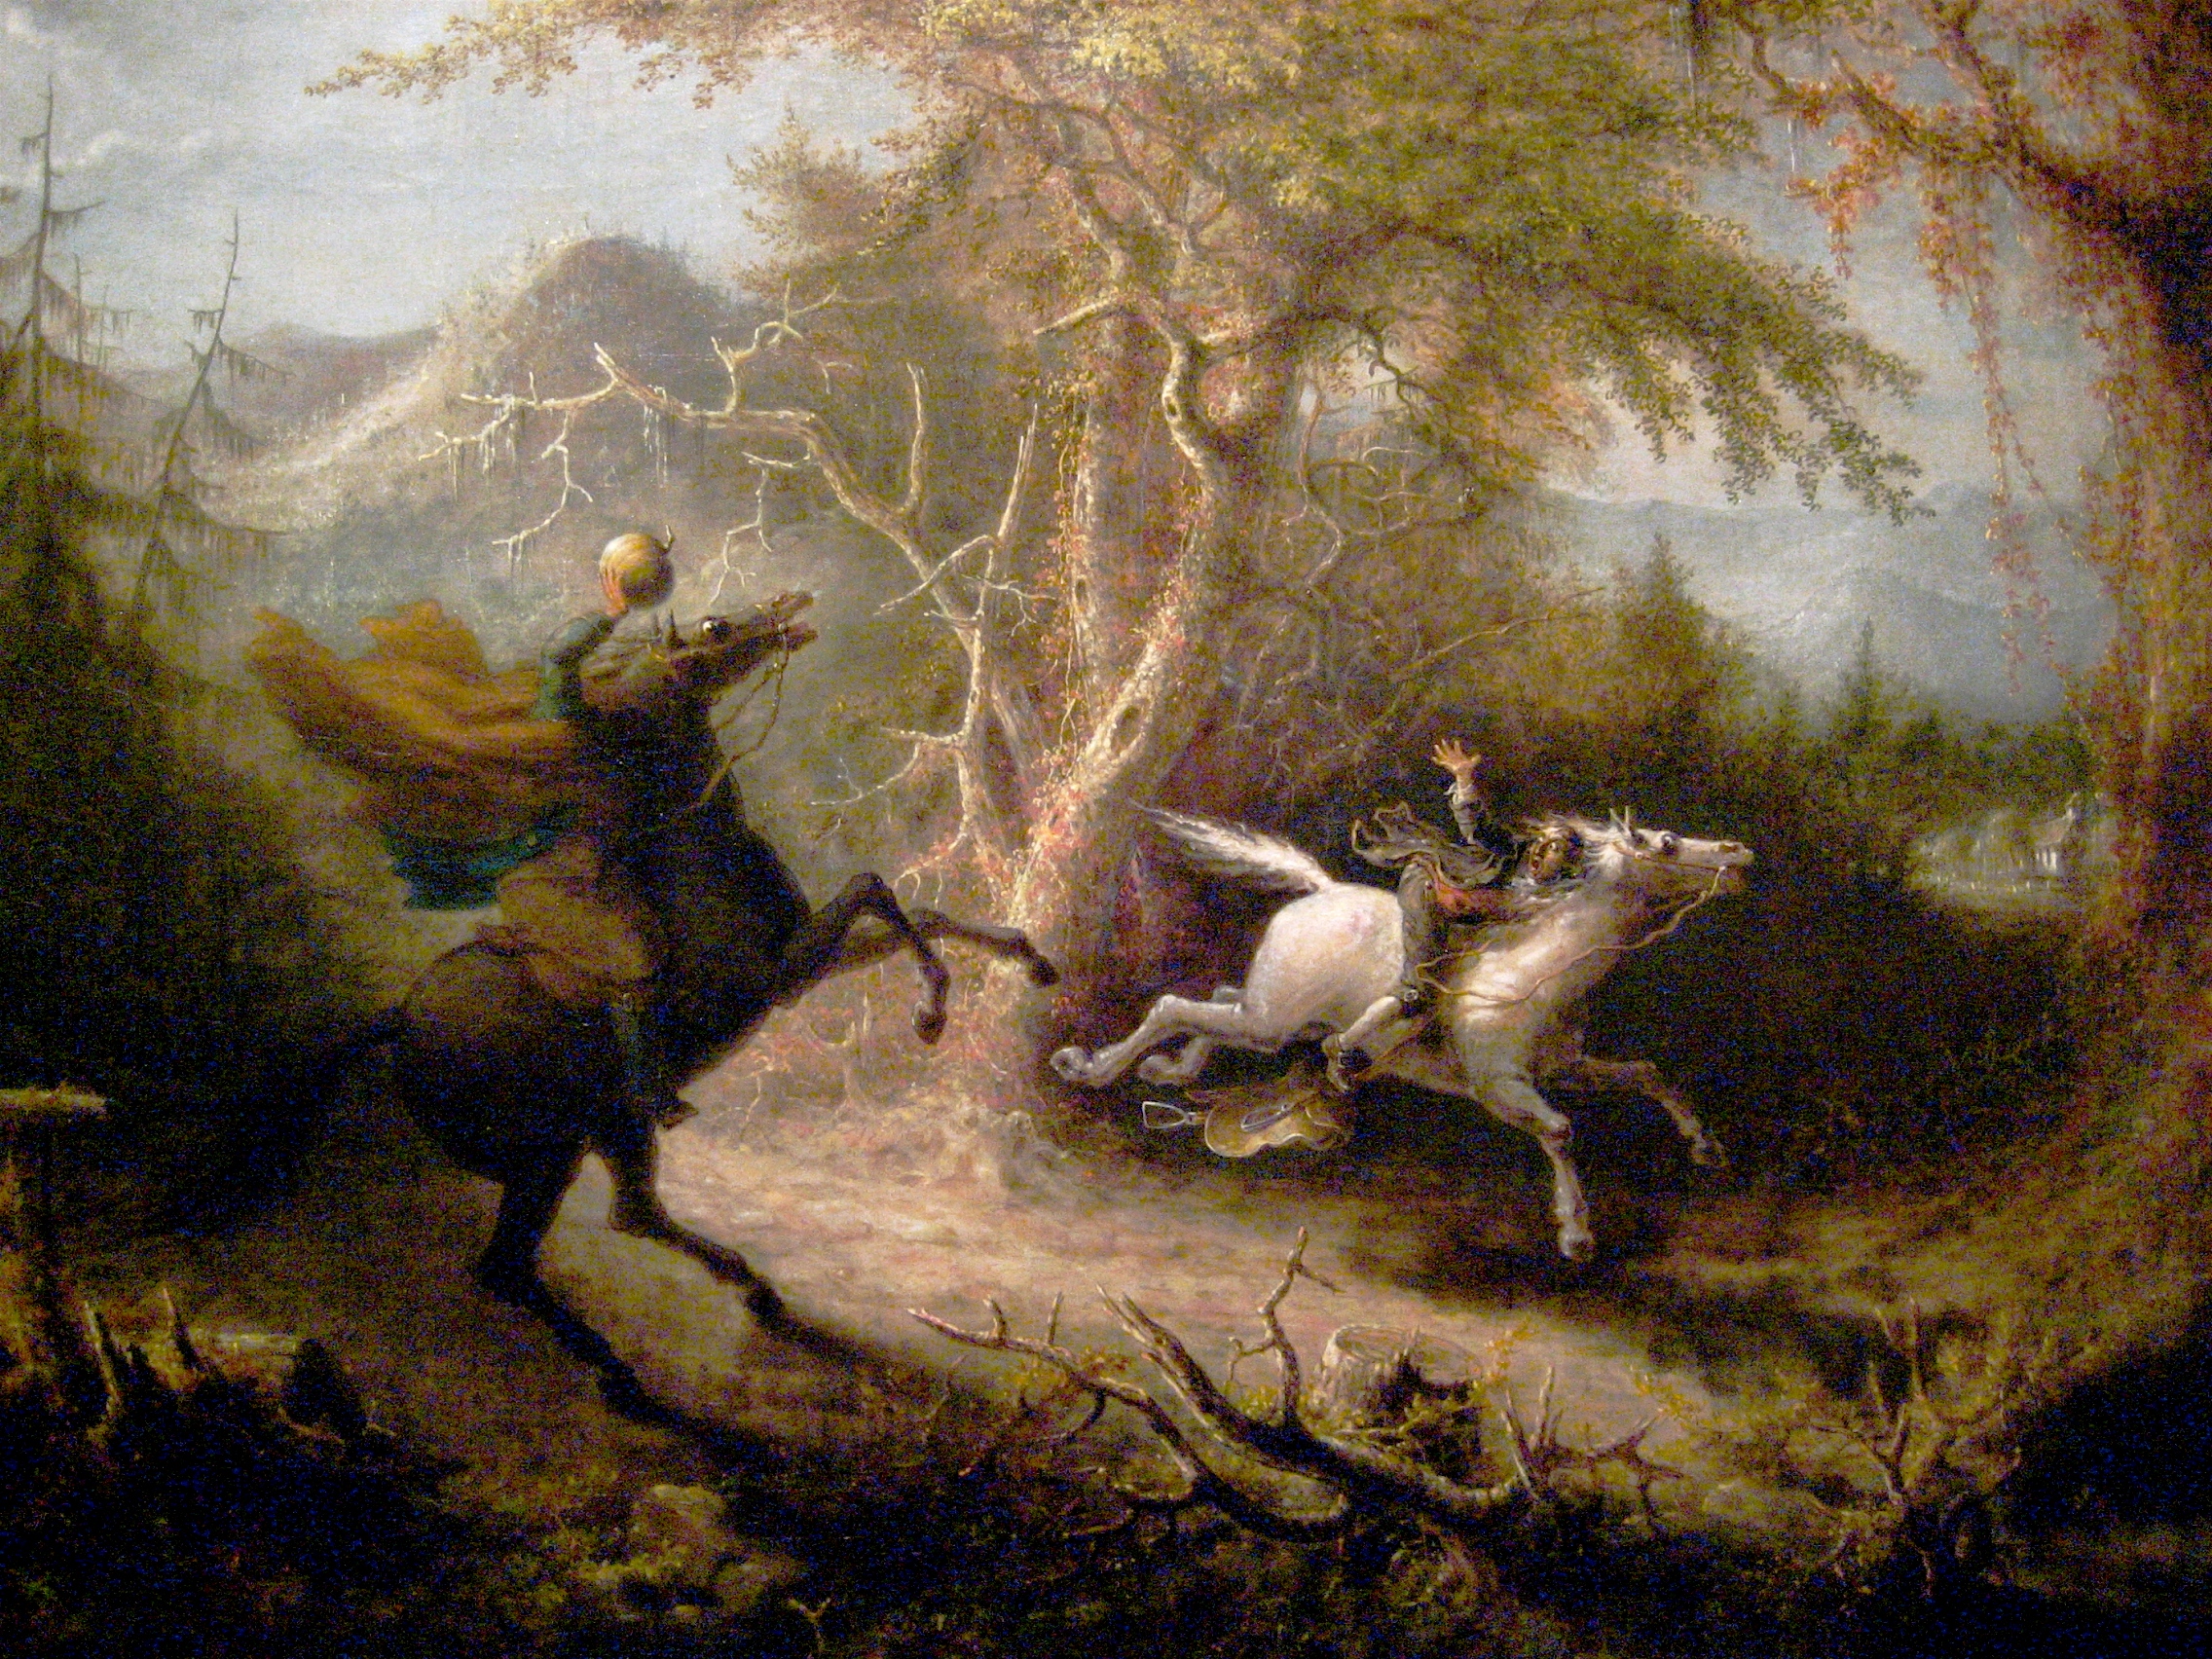 http://upload.wikimedia.org/wikipedia/commons/4/4c/The_Headless_Horseman_Pursuing_Ichabod_Crane.jpg